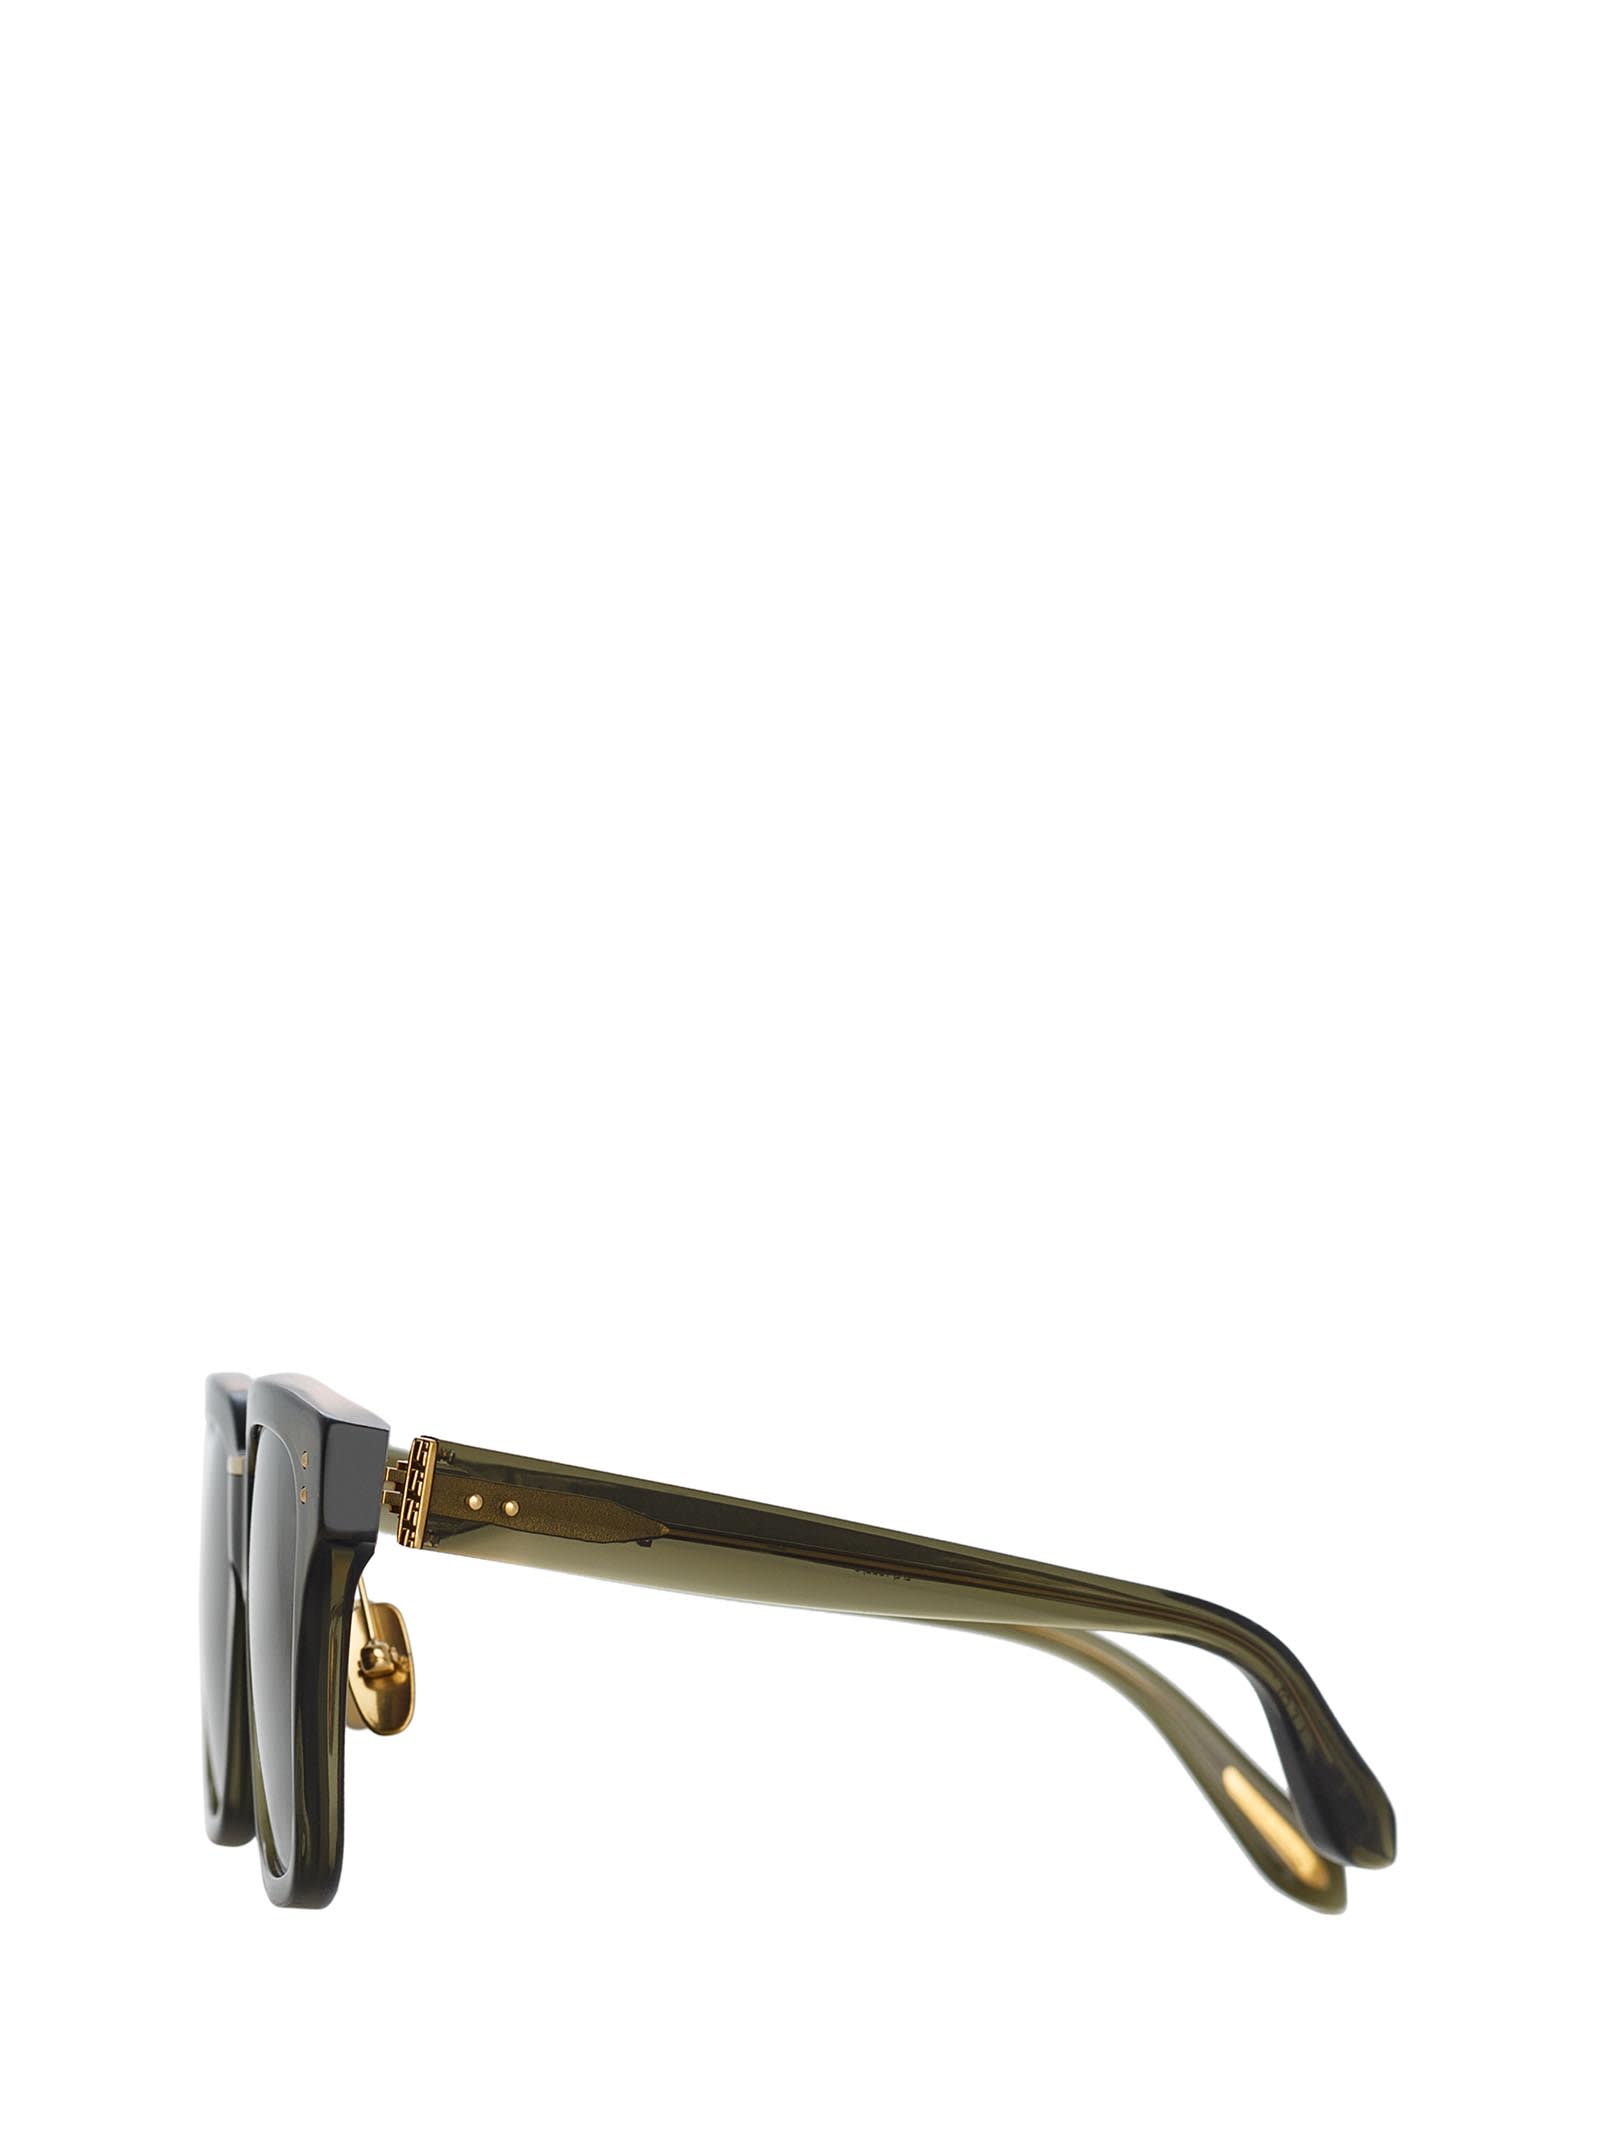 Shop Linda Farrow Lfl1322 Translucent Green / Light Gold Sunglasses